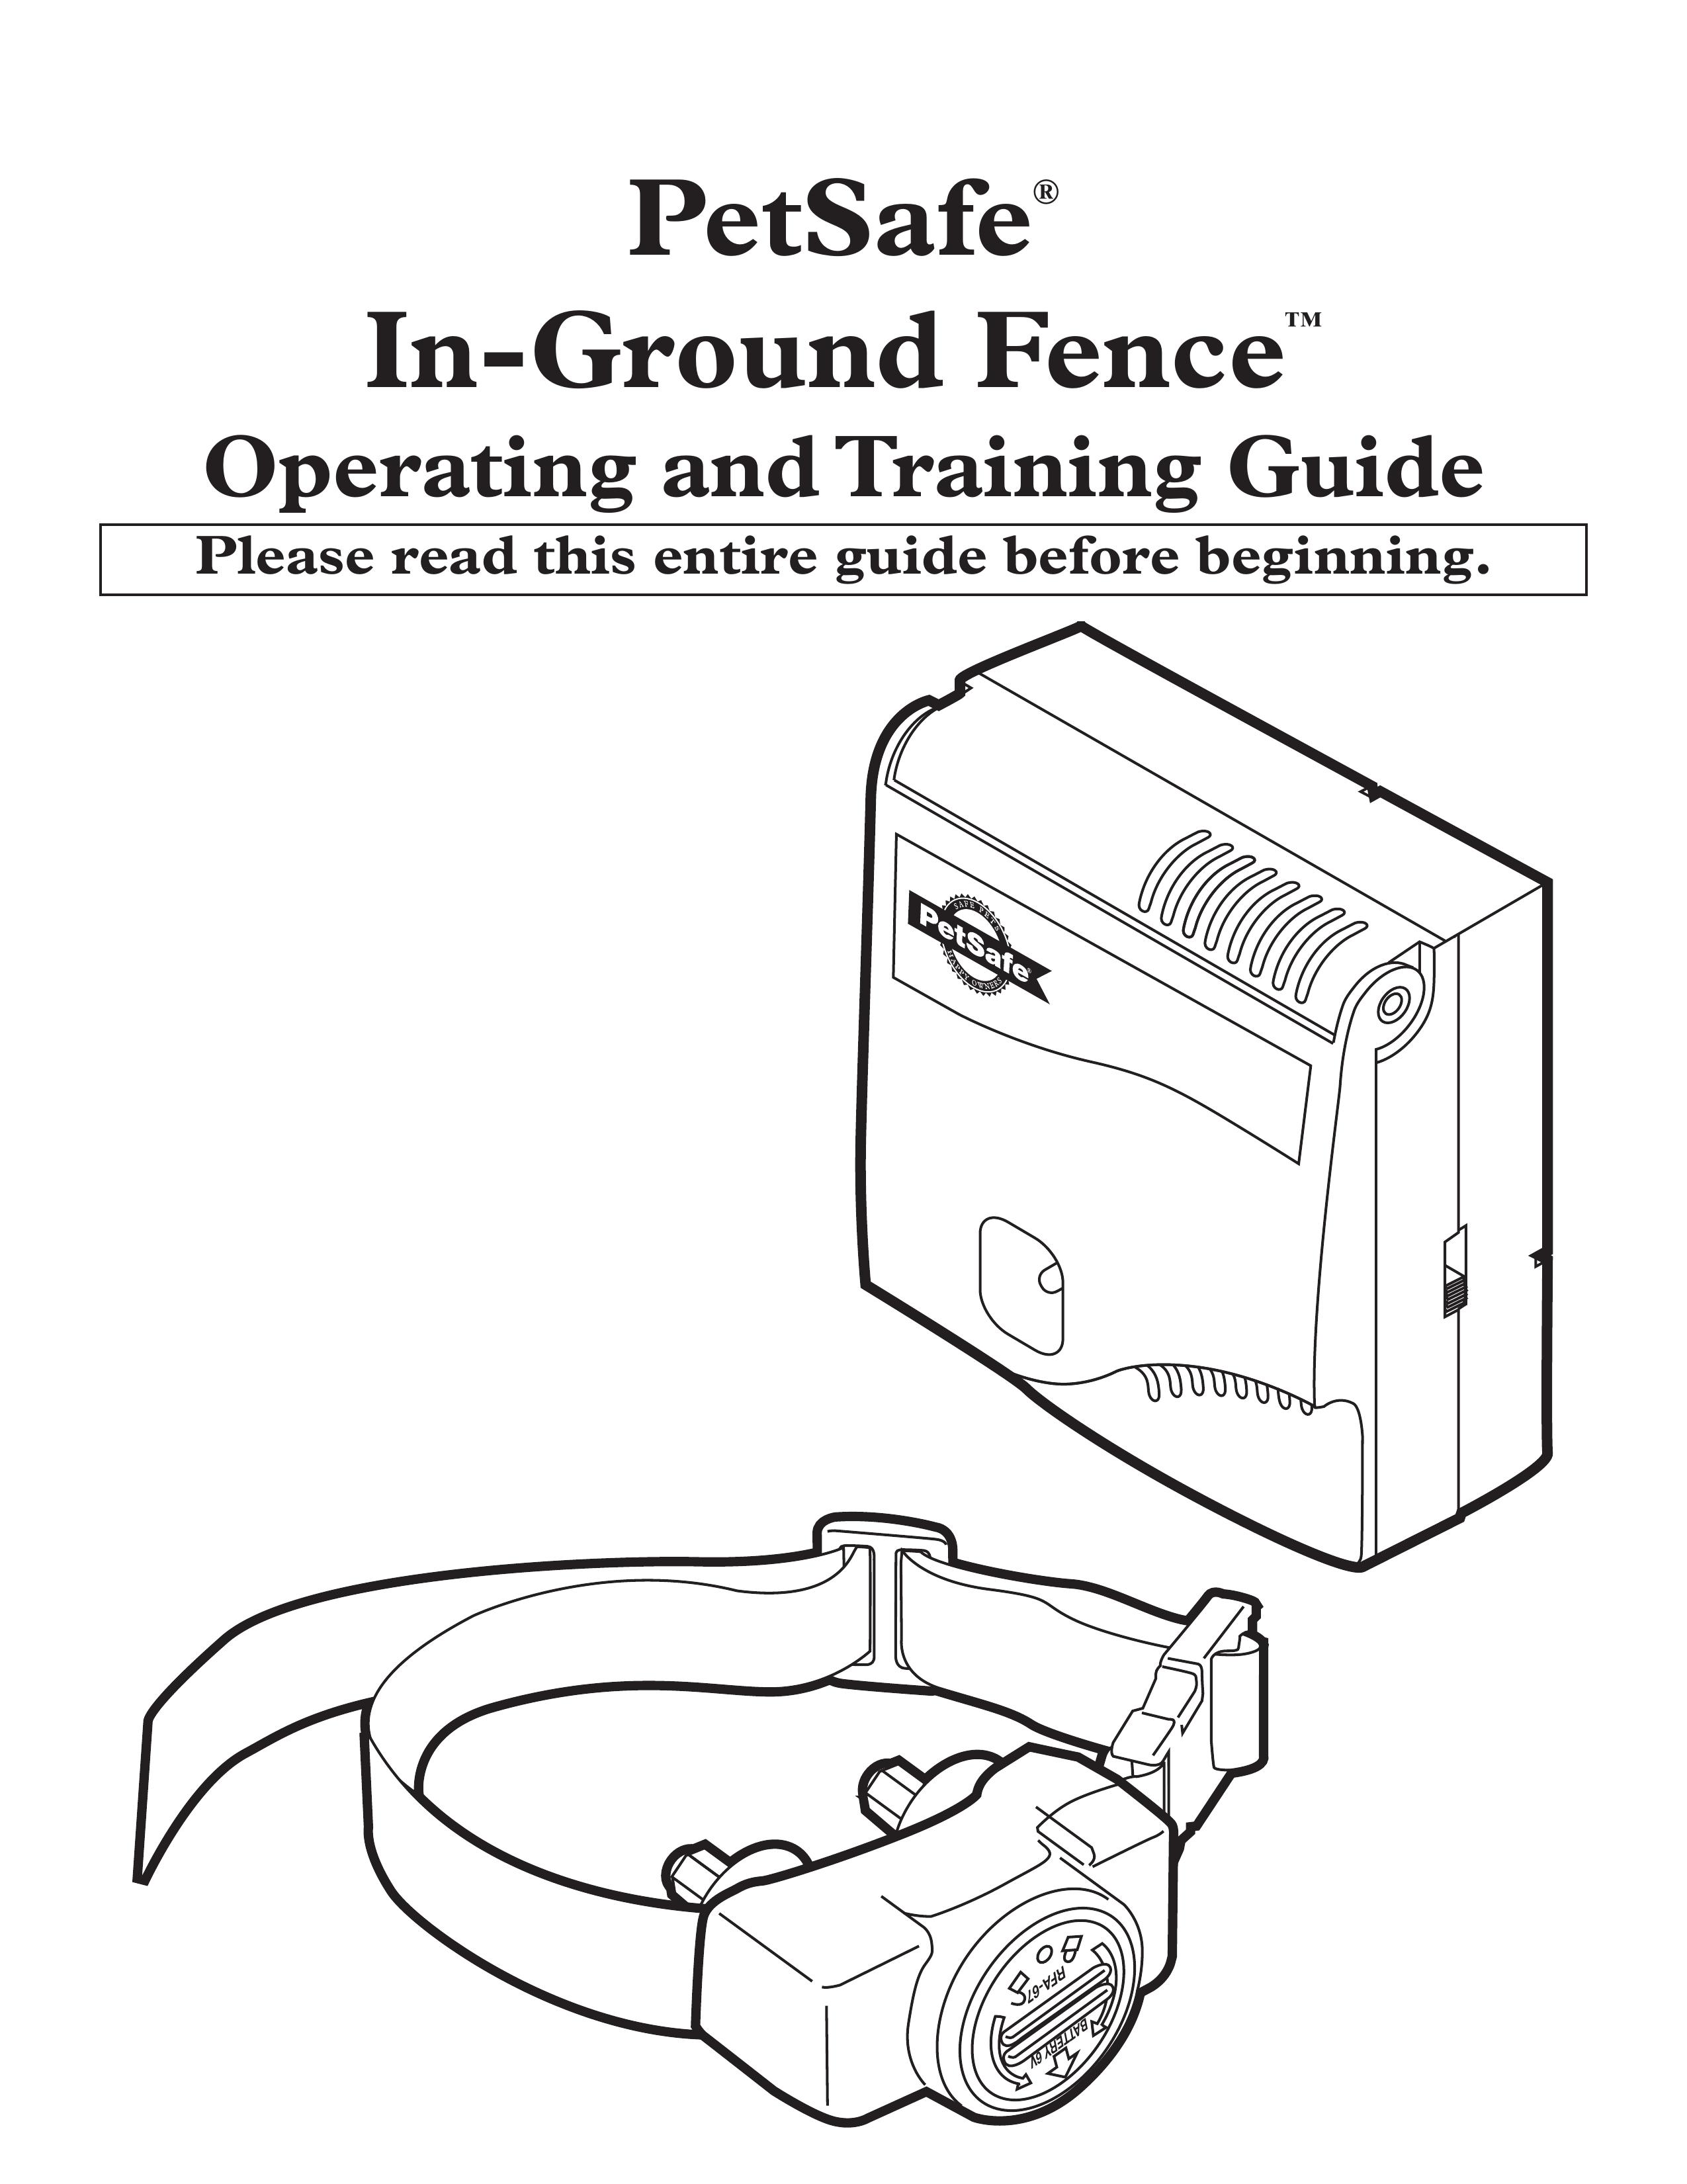 Petsafe RFA-67 Electric Pet Fence User Manual